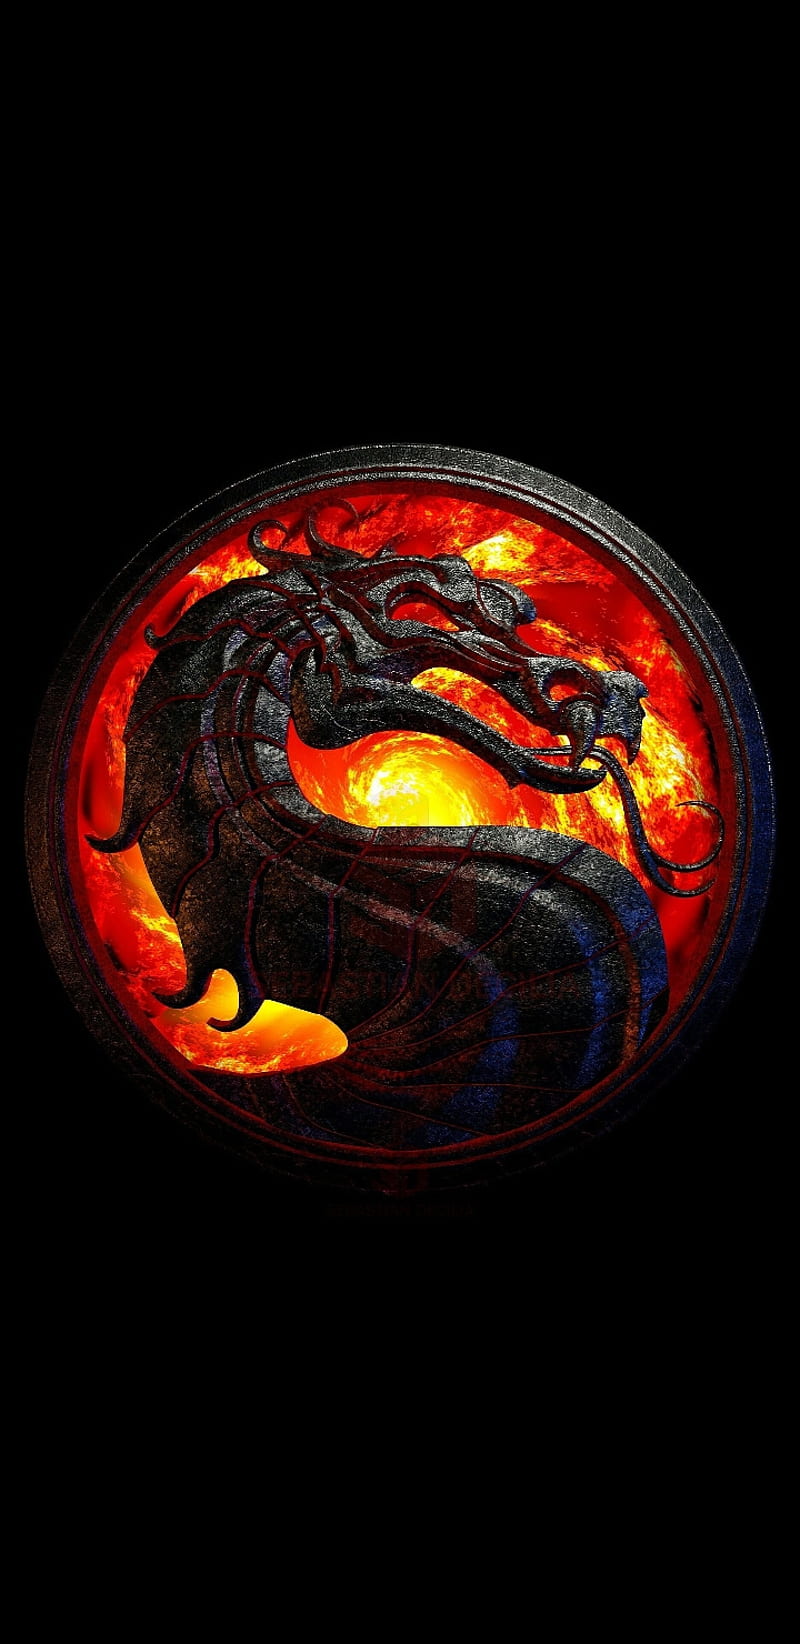 Download Mortal Kombat wallpapers for mobile phone free Mortal Kombat  HD pictures